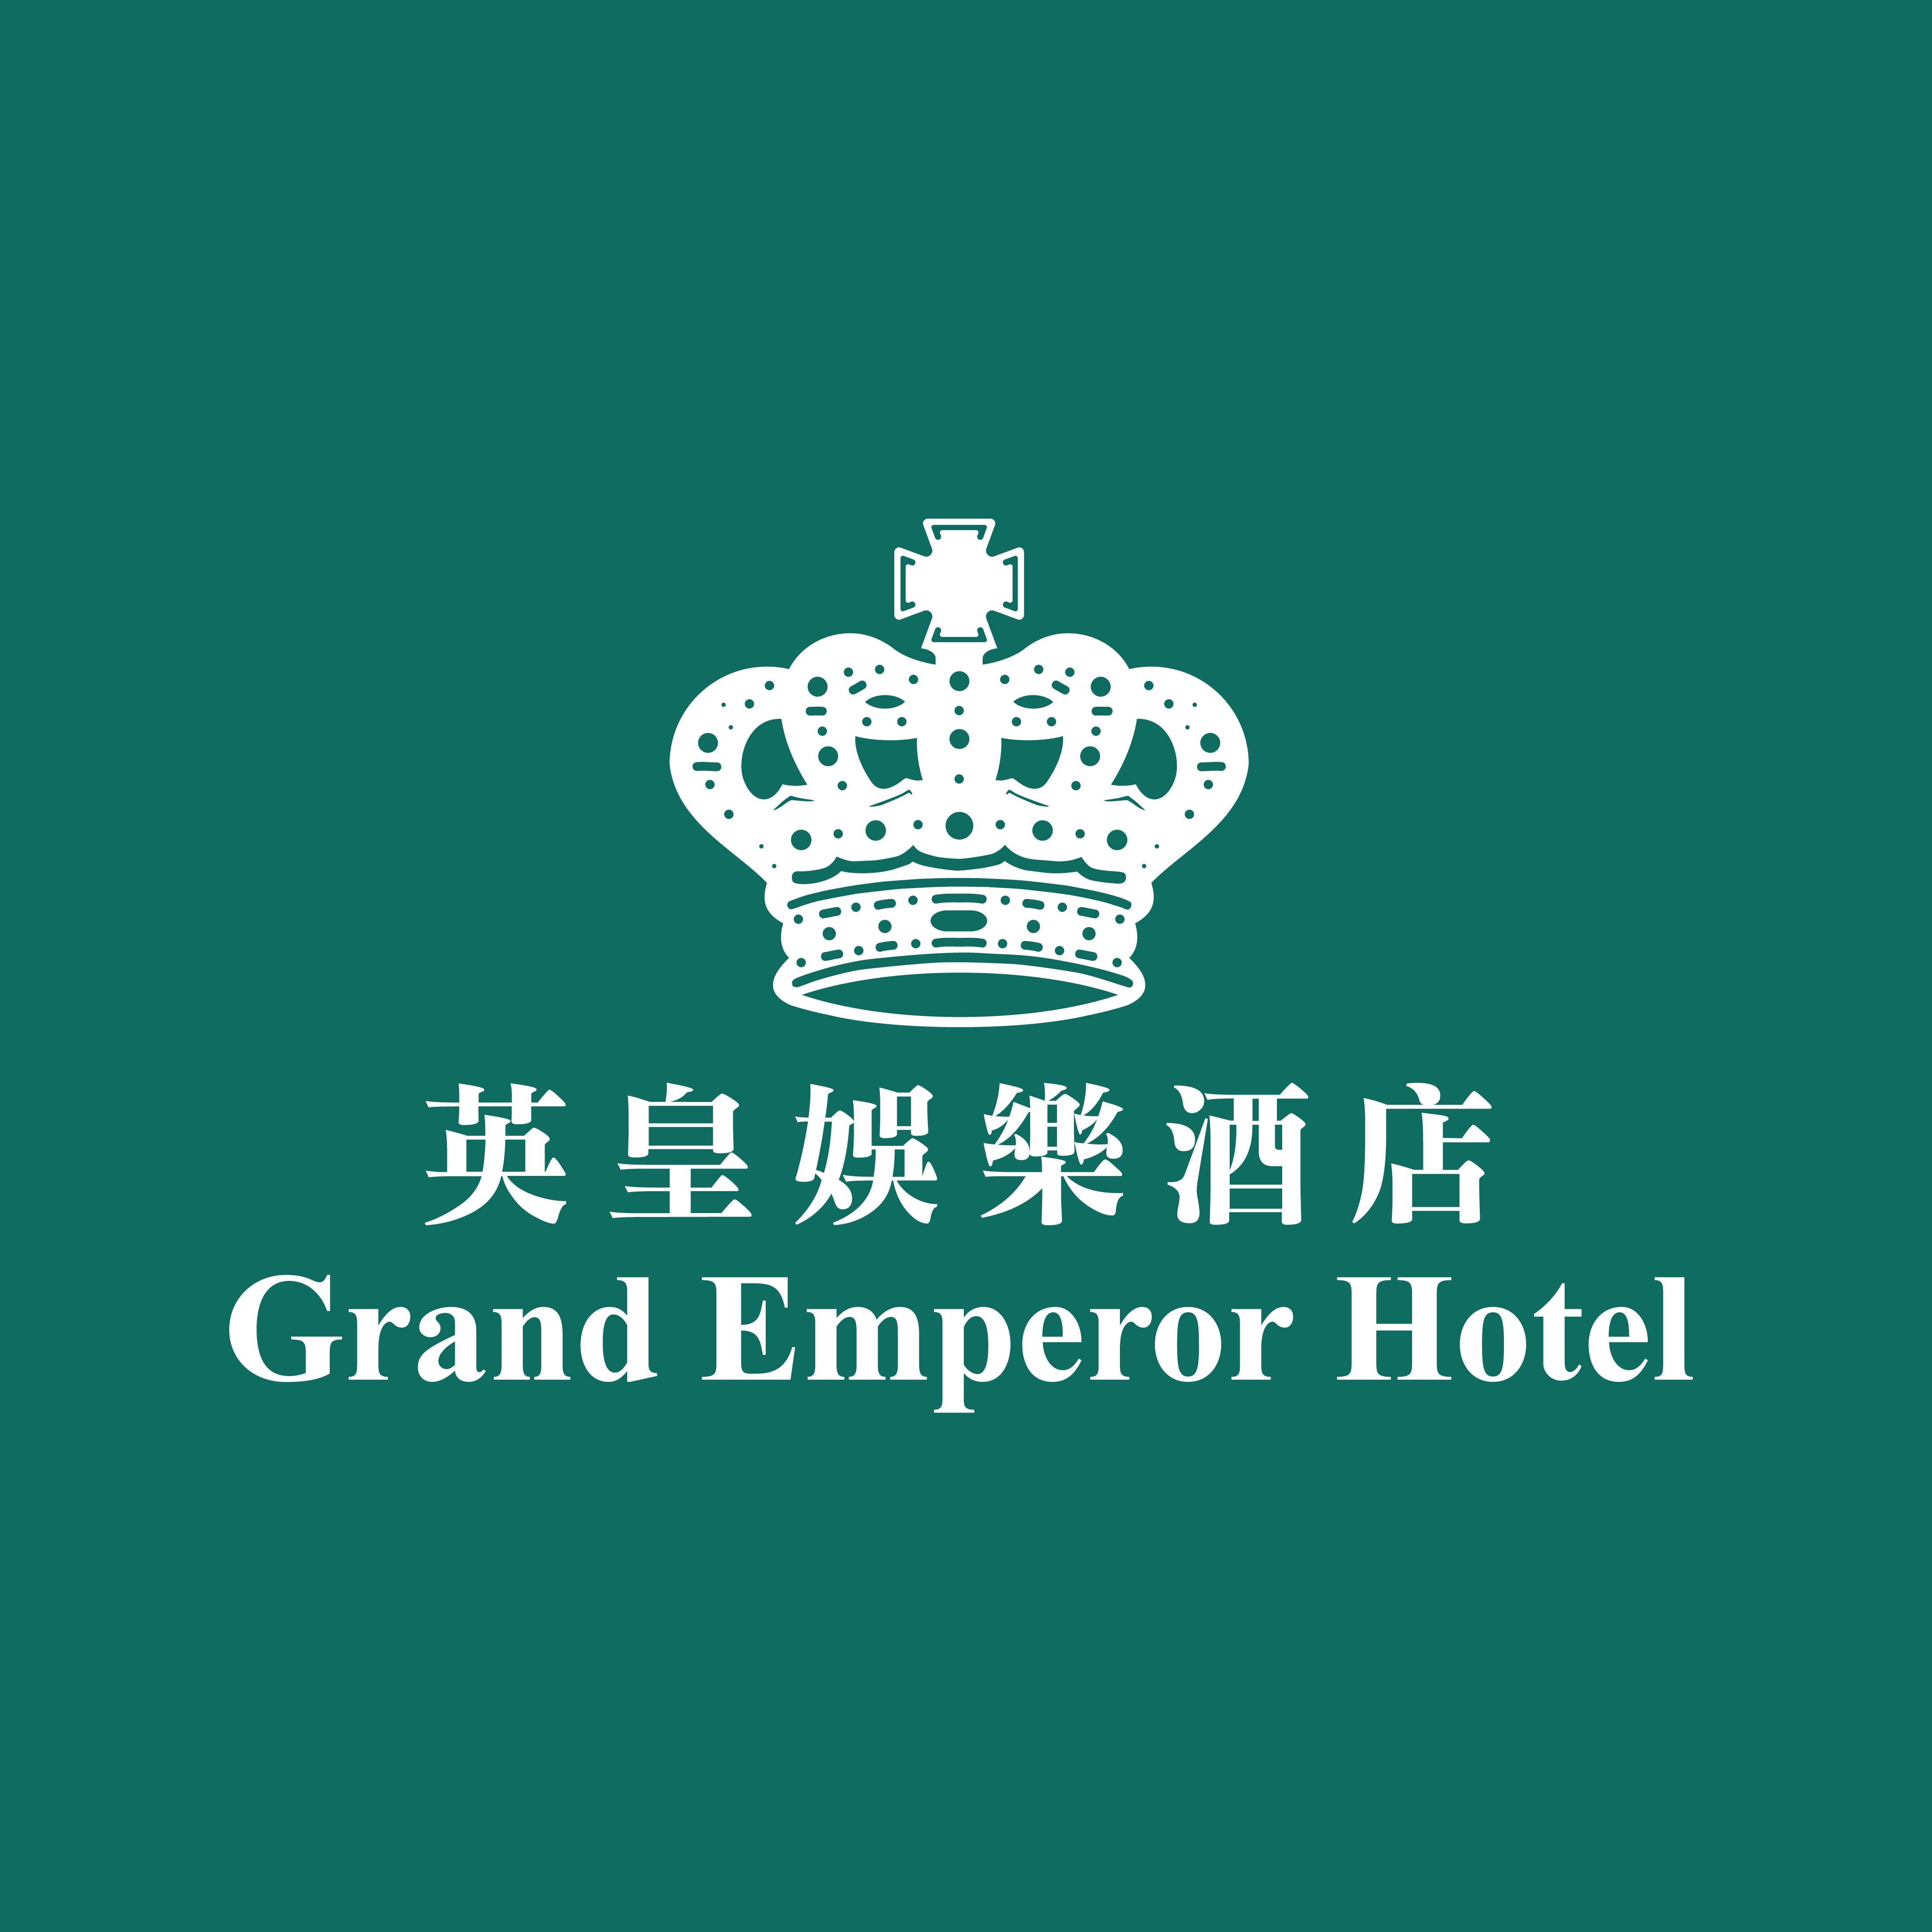 Emperor hotel danbury massage